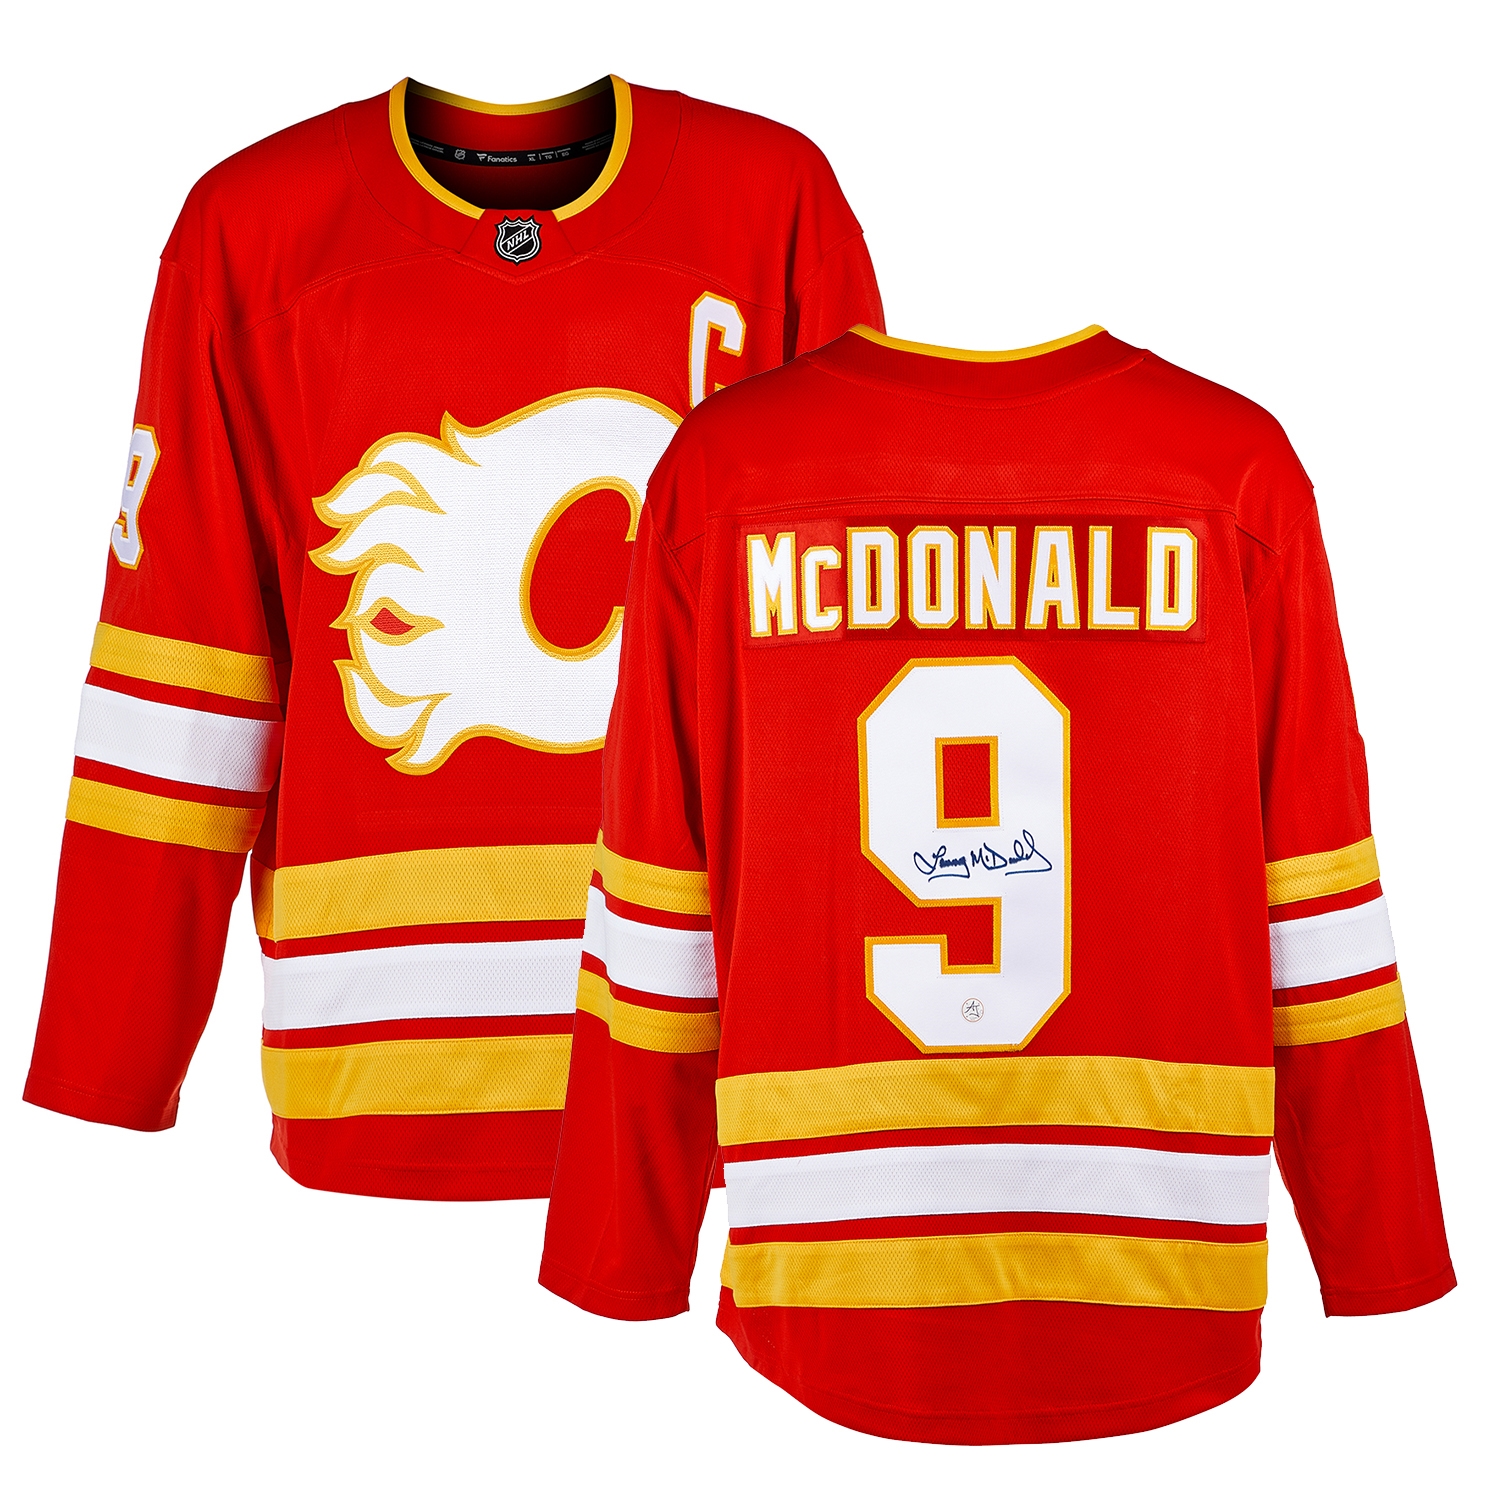 Lanny McDonald Autographed Calgary Flames Fanatics Jersey